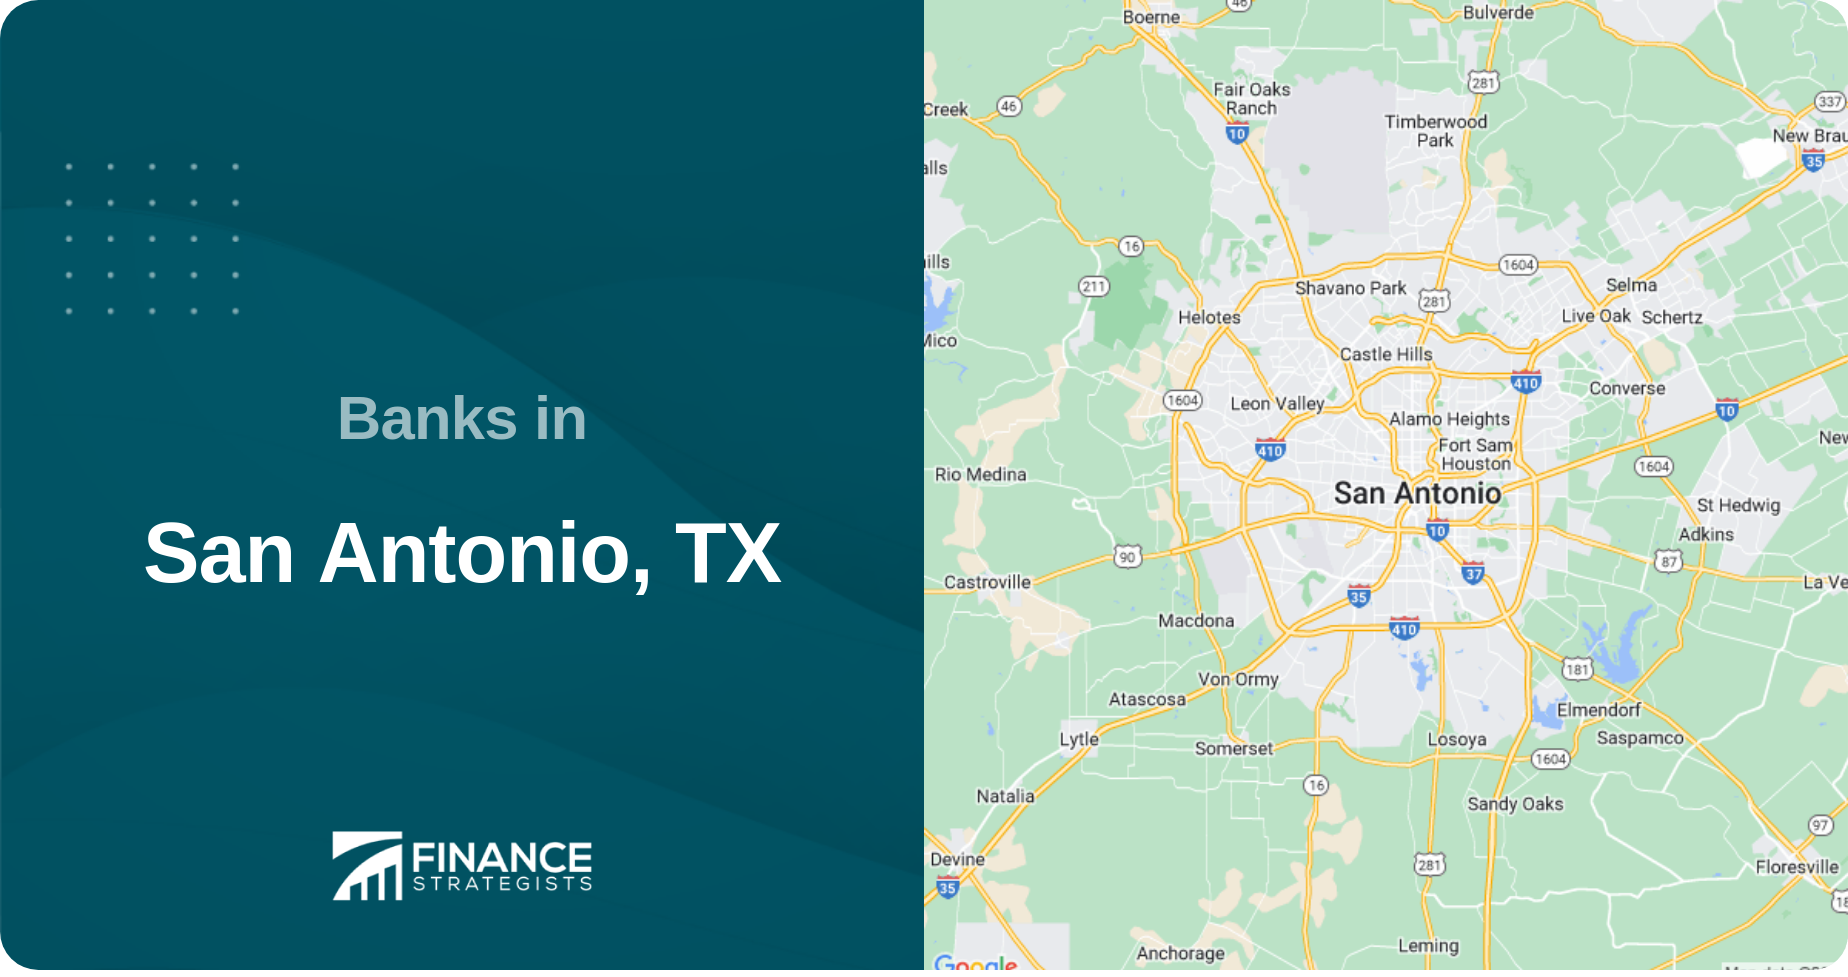 Banks in San Antonio, TX